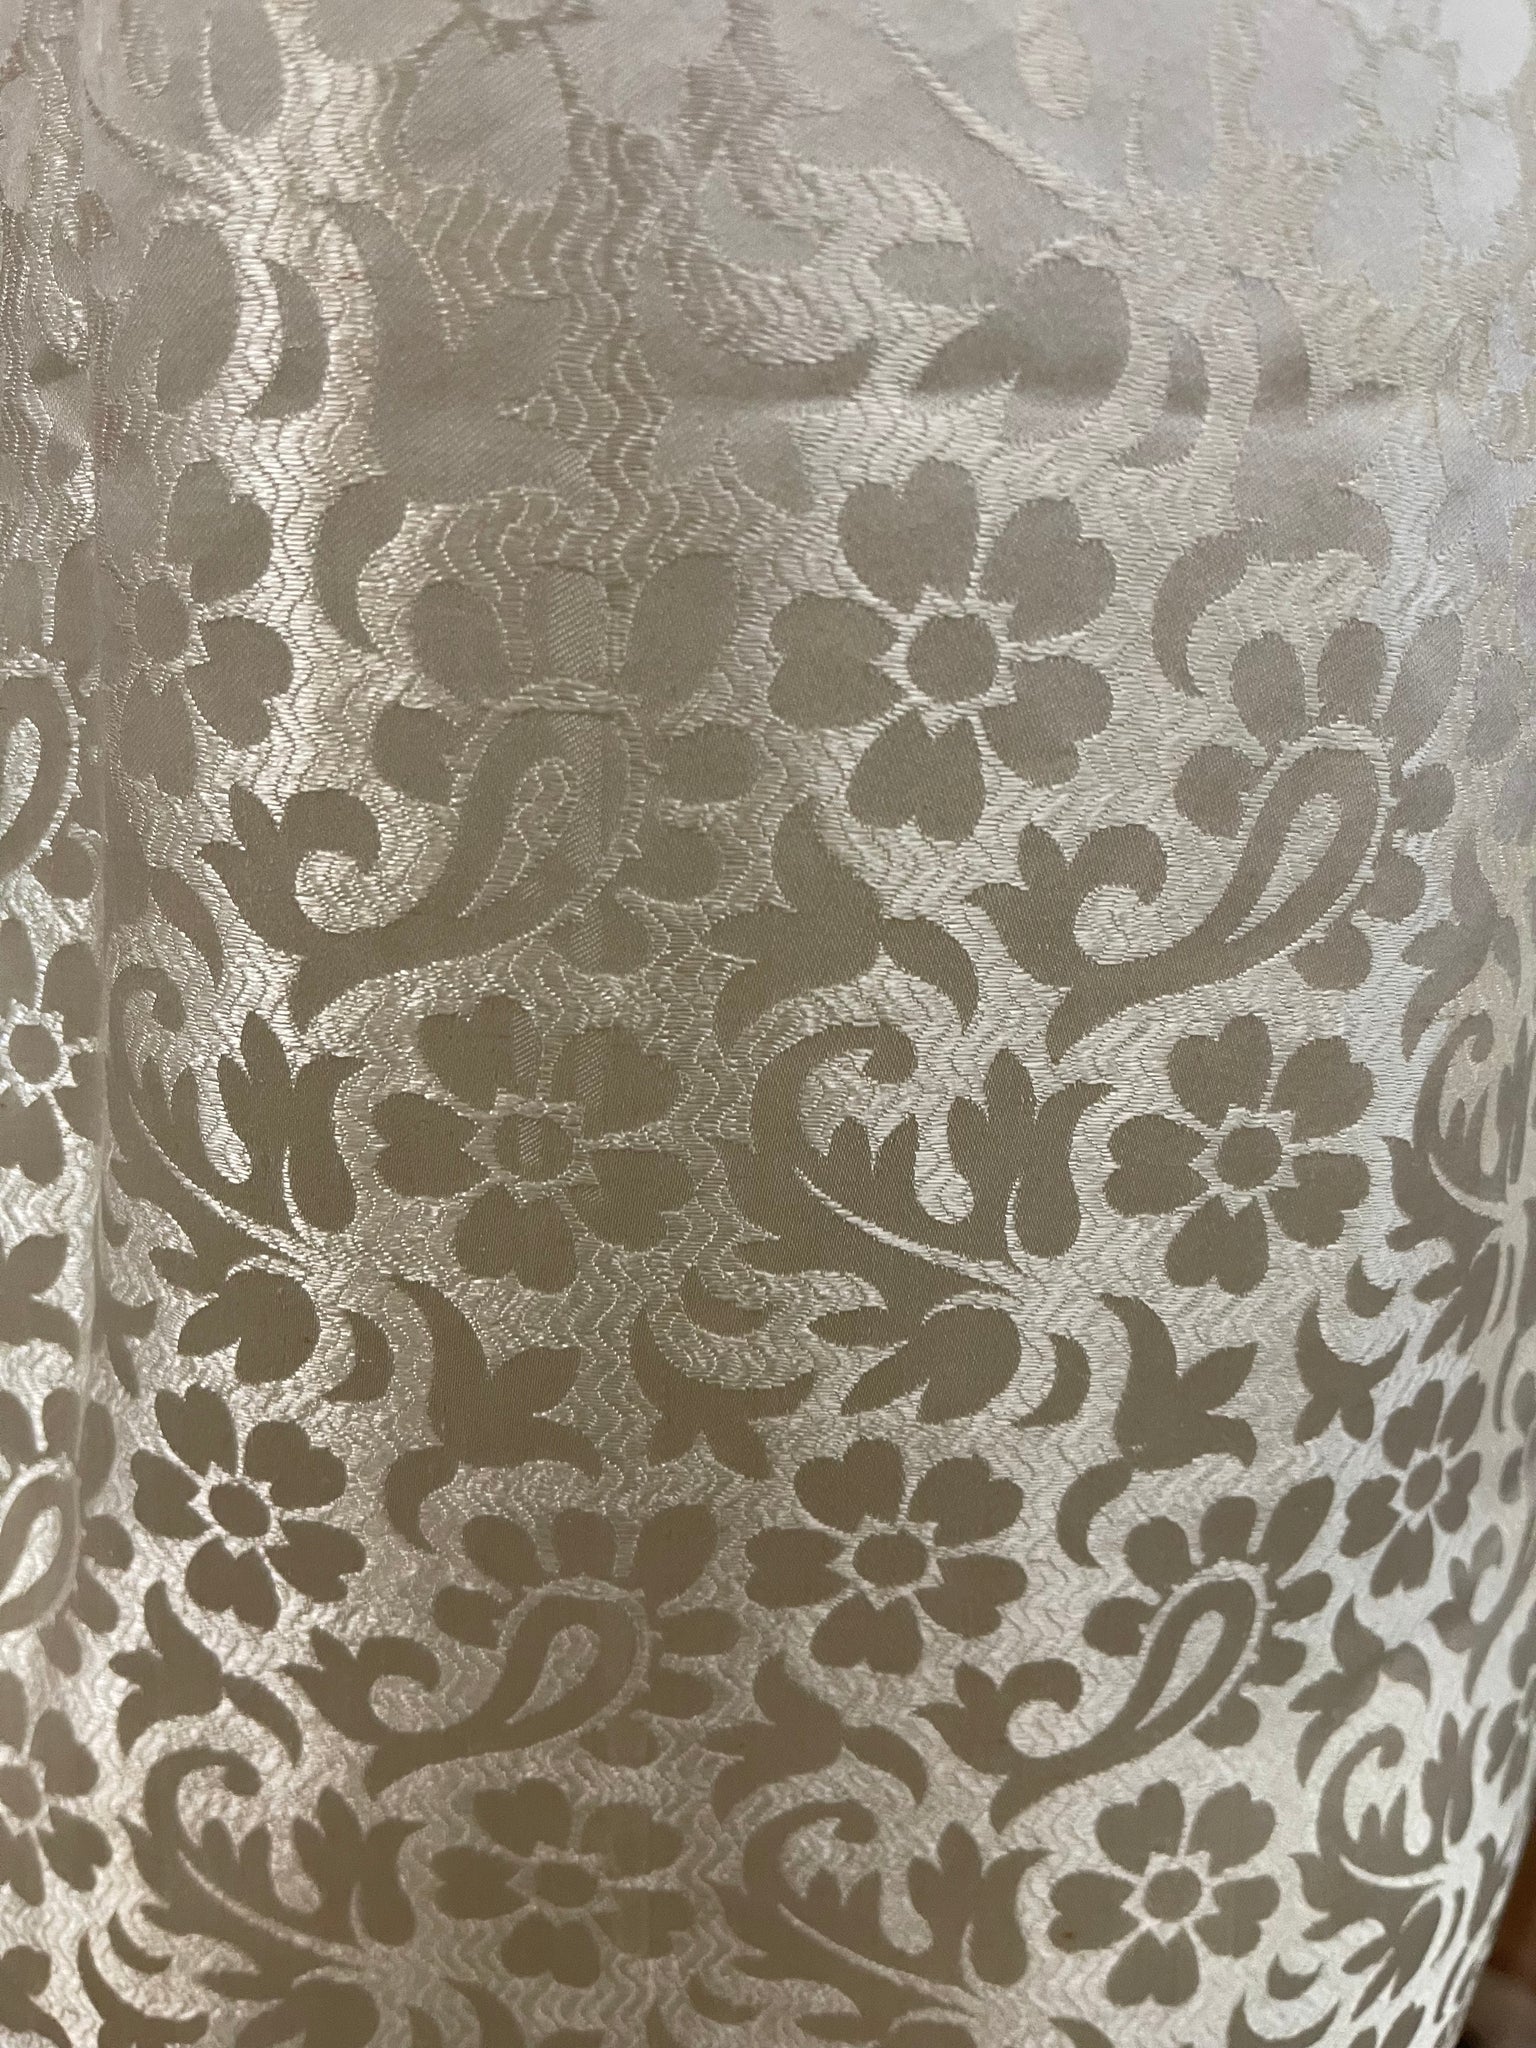 Mid 20th Century White Jacquard Cheongsam, fabric